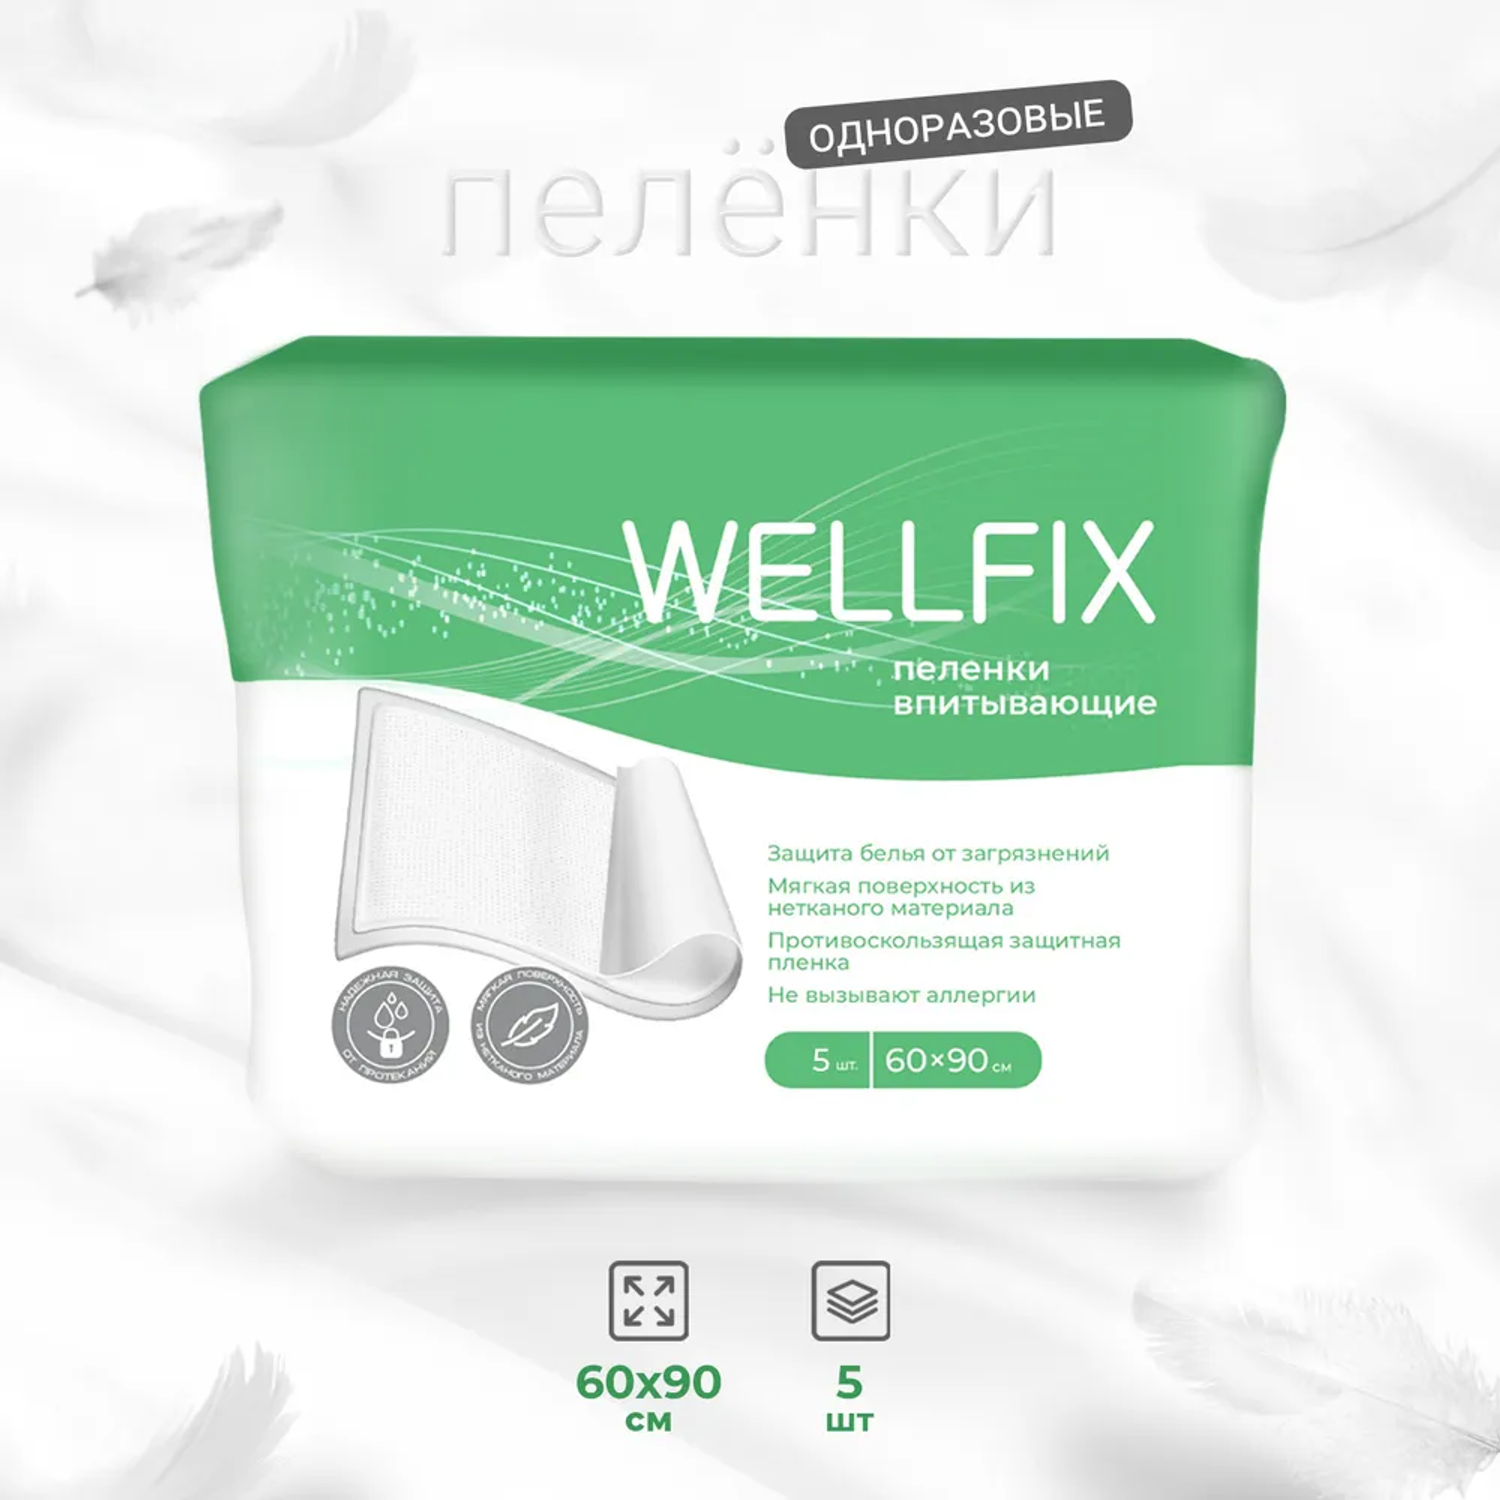 Пеленки медицинские Wellfix впитывающие размер 60х90 5 штук - фото 2